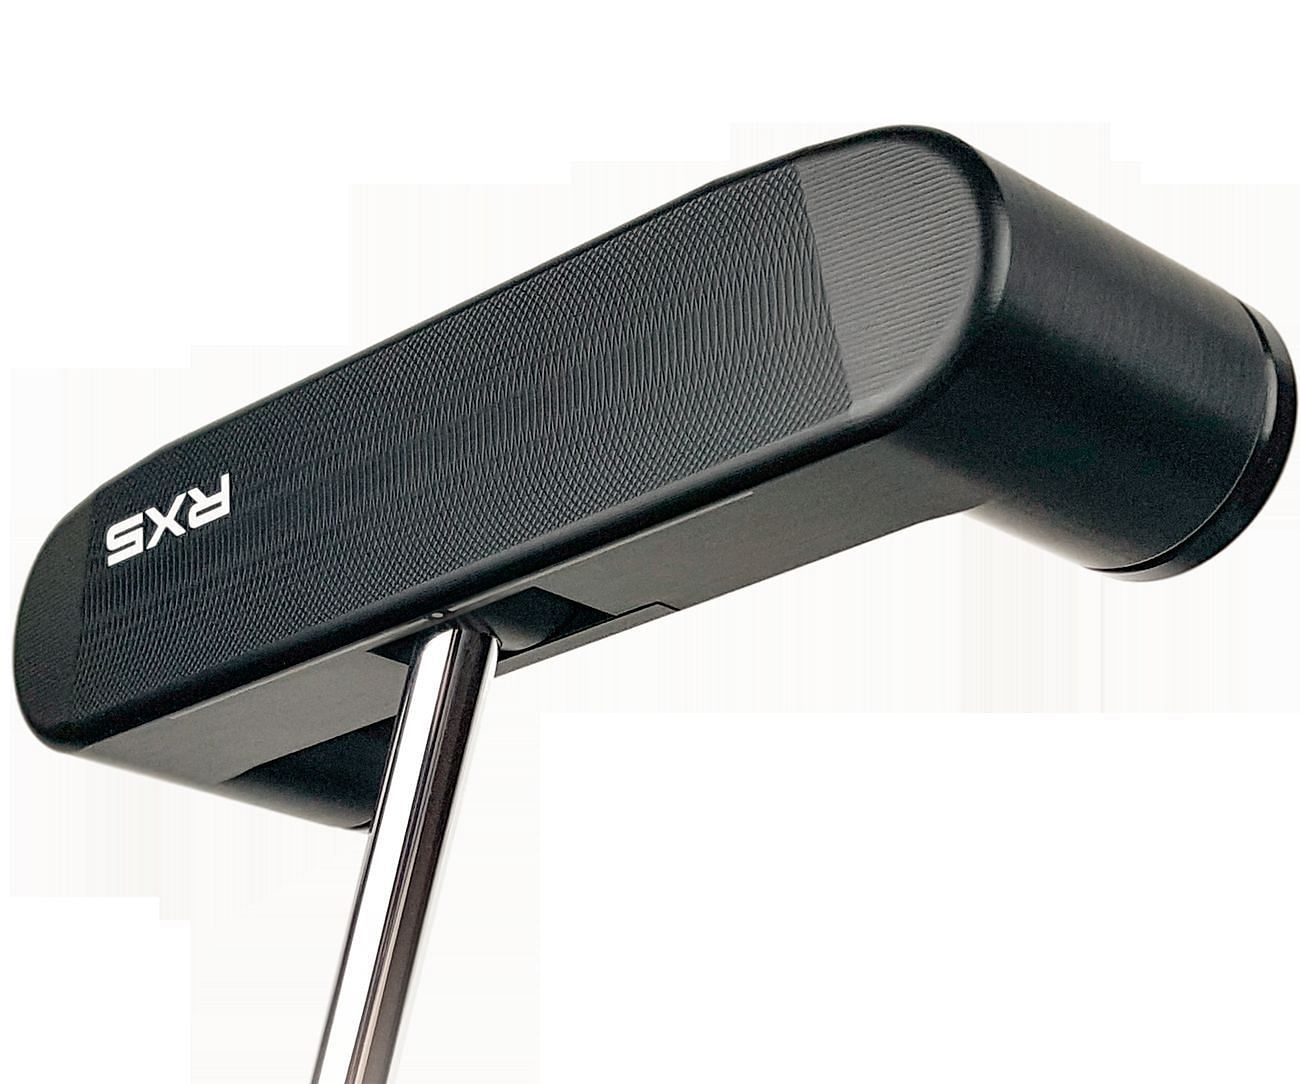 CURE RX5 Putter (Image via Golf Magazine)